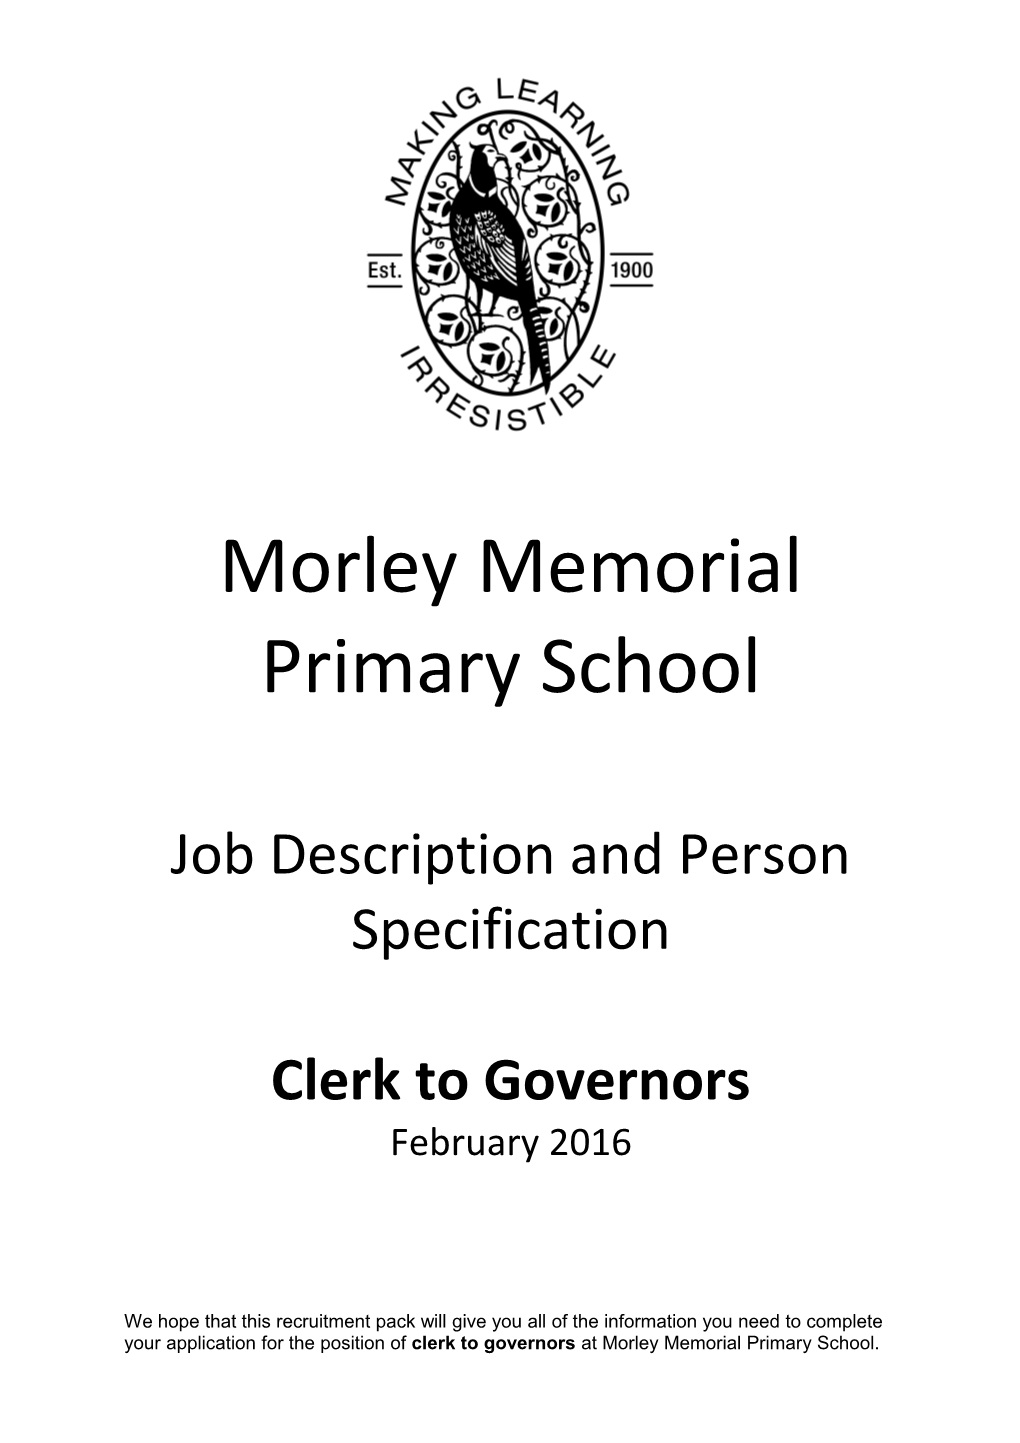 Morley Memorial Primary School